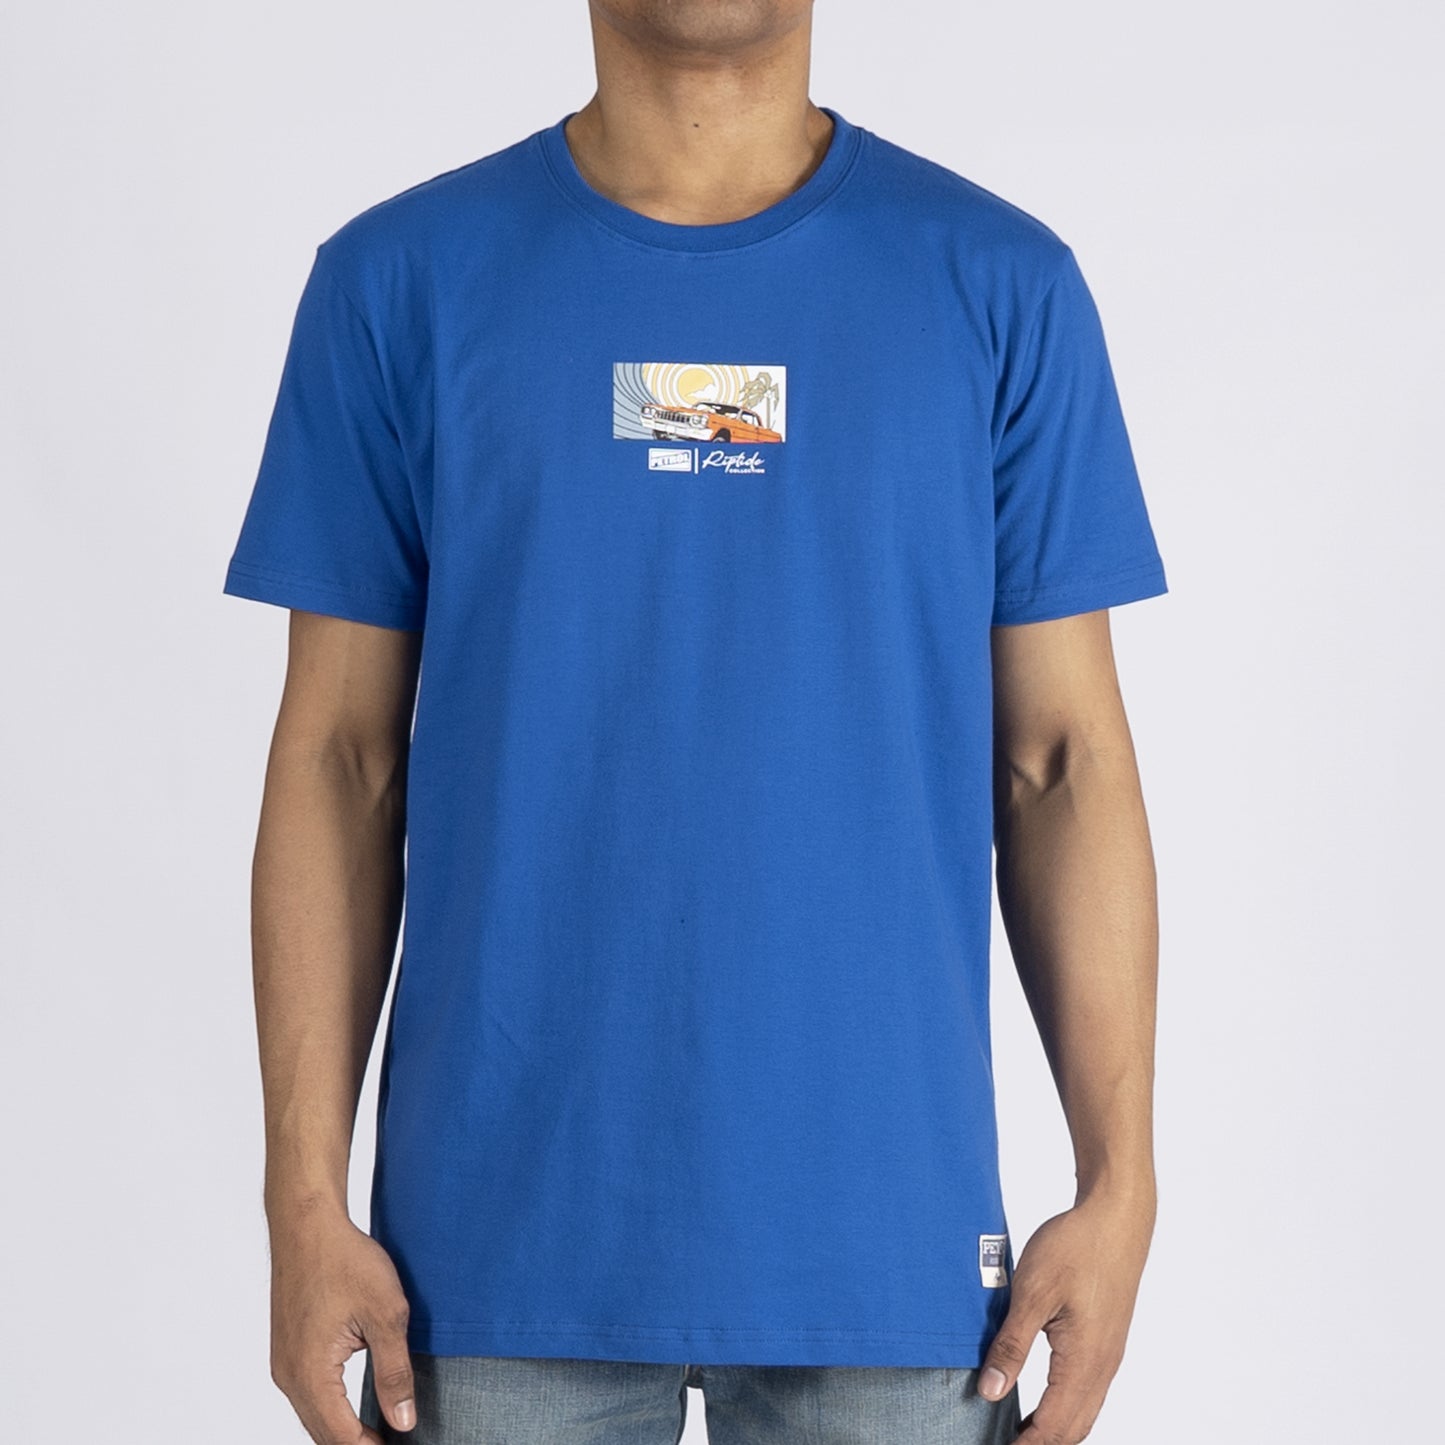 Petrol Basic Tees for Men Slim Fitting Shirt CVC Jersey Fabric Trendy fashion Casual Top True Blue T-shirt for Men 126688-U (True Blue)